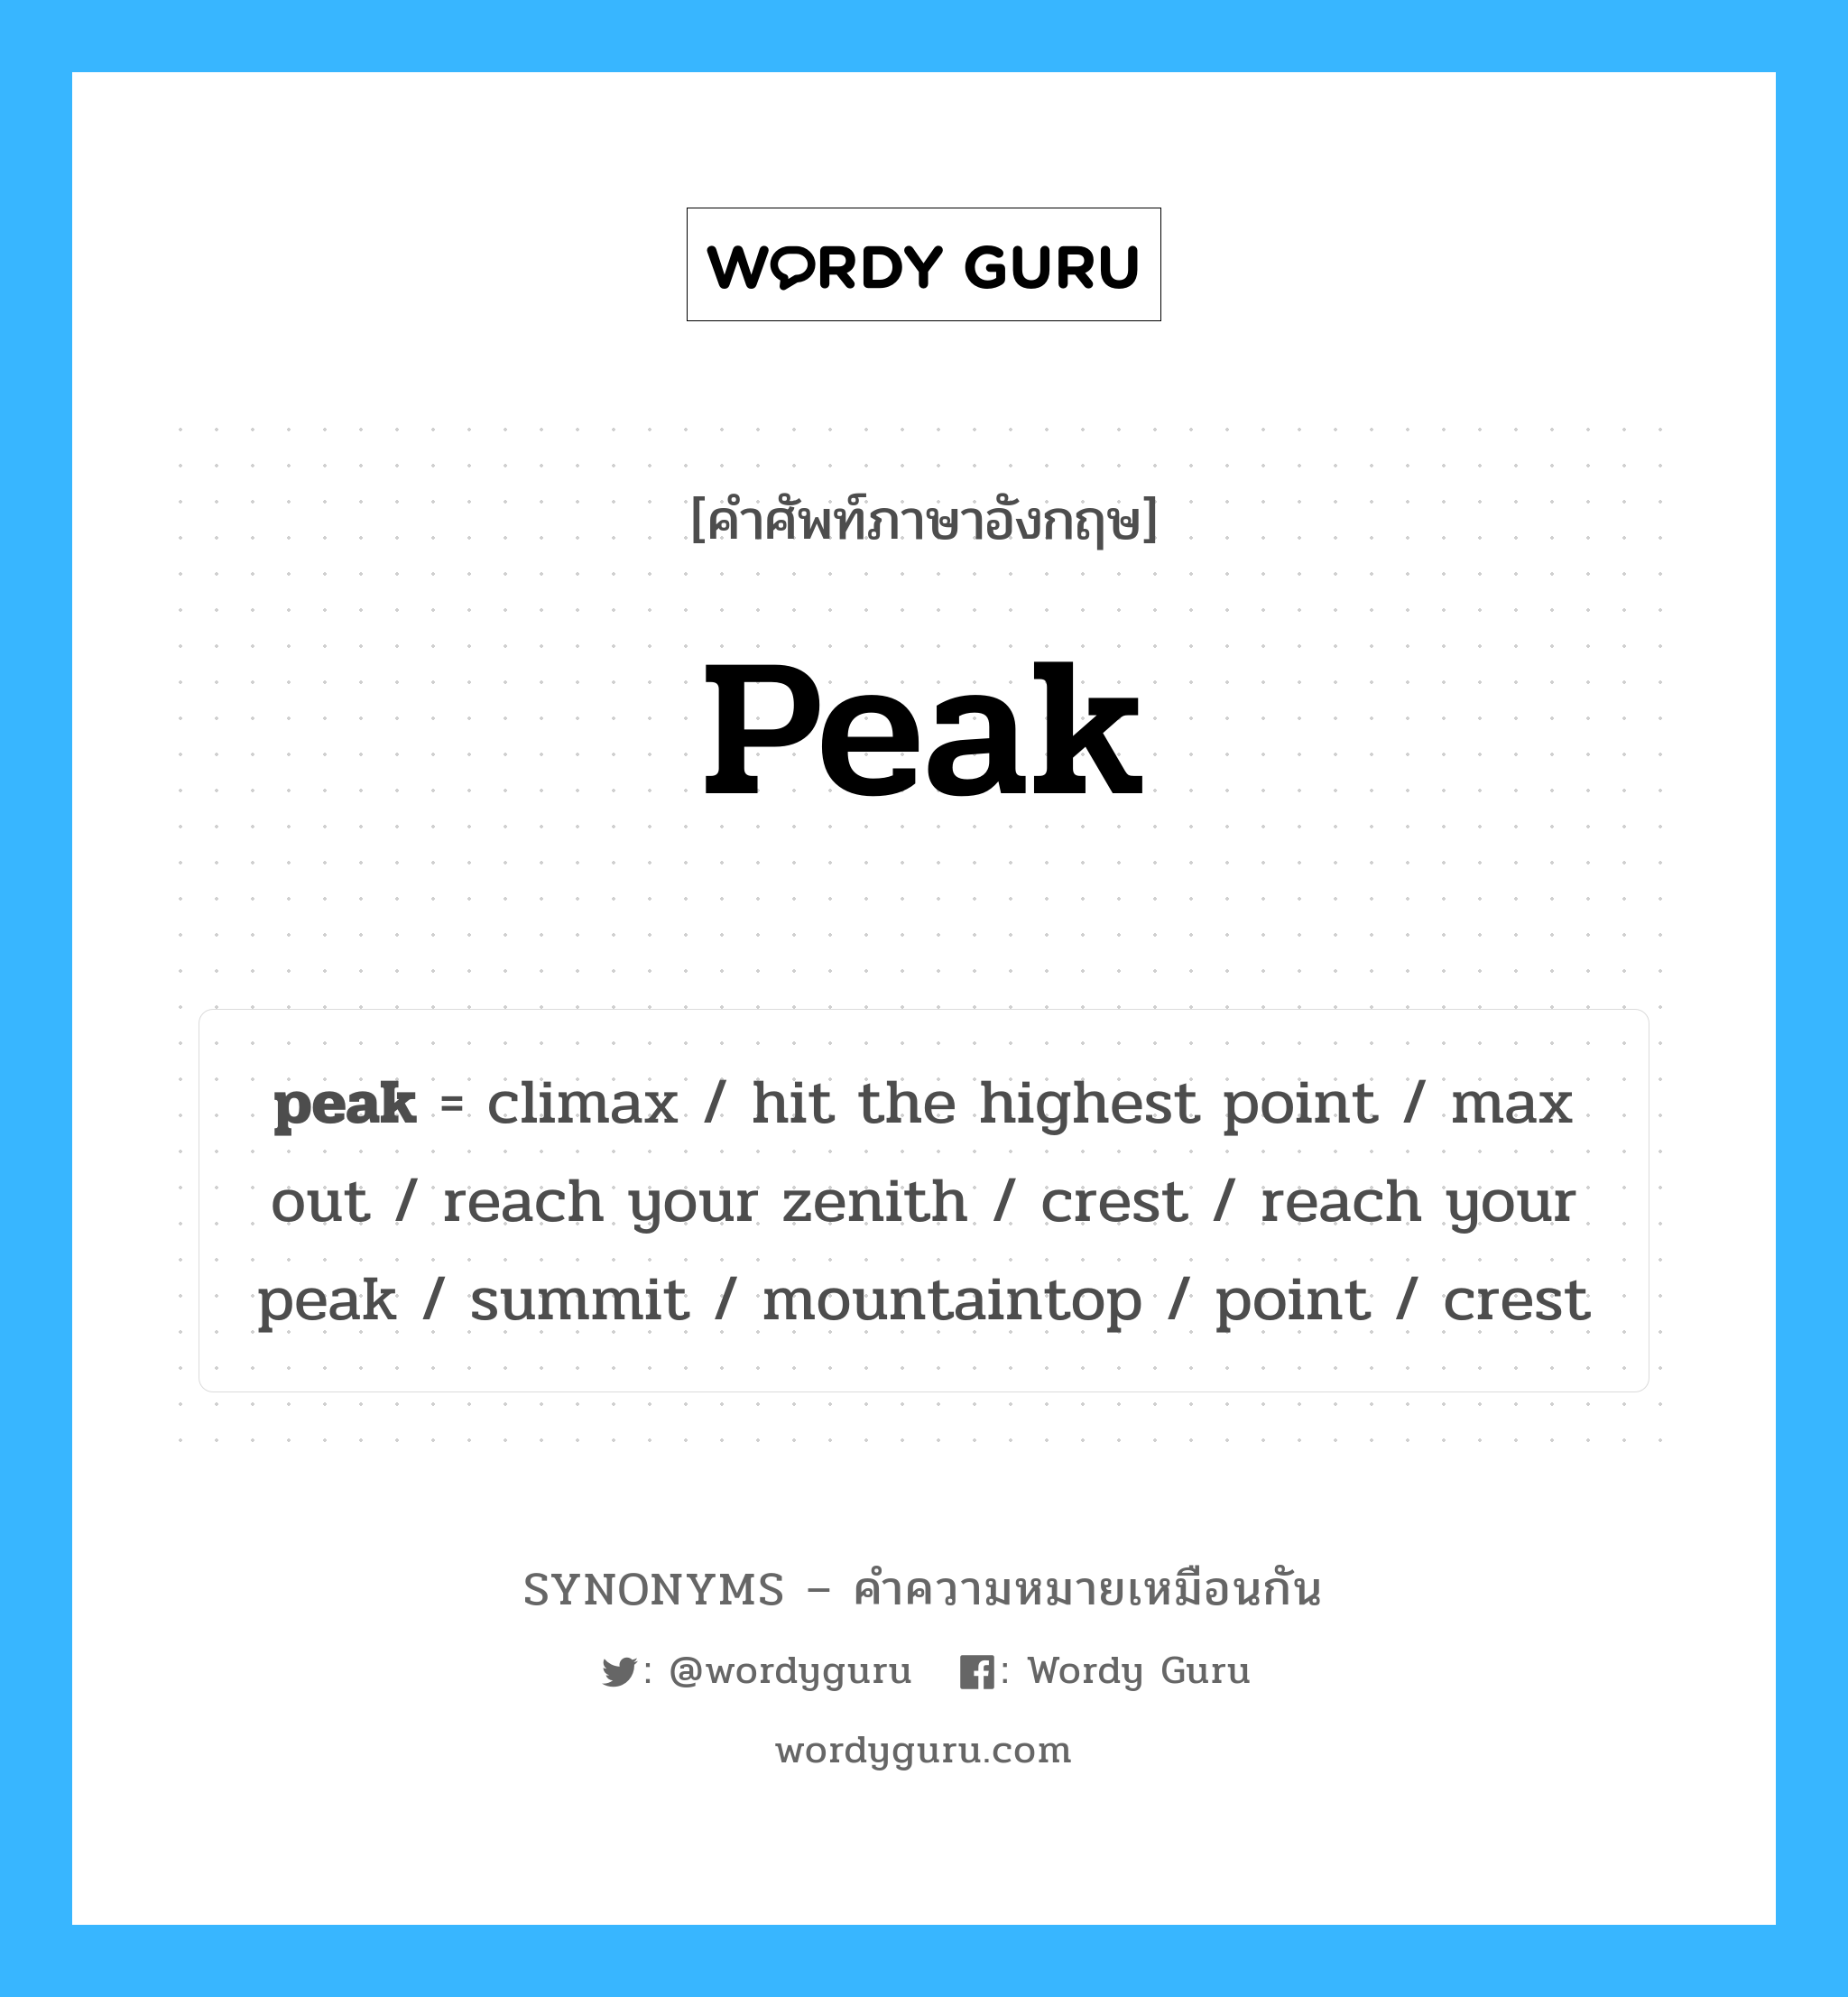 mountaintop เป็นหนึ่งใน peak และมีคำอื่น ๆ อีกดังนี้, คำศัพท์ภาษาอังกฤษ mountaintop ความหมายคล้ายกันกับ peak แปลว่า ยอด หมวด peak